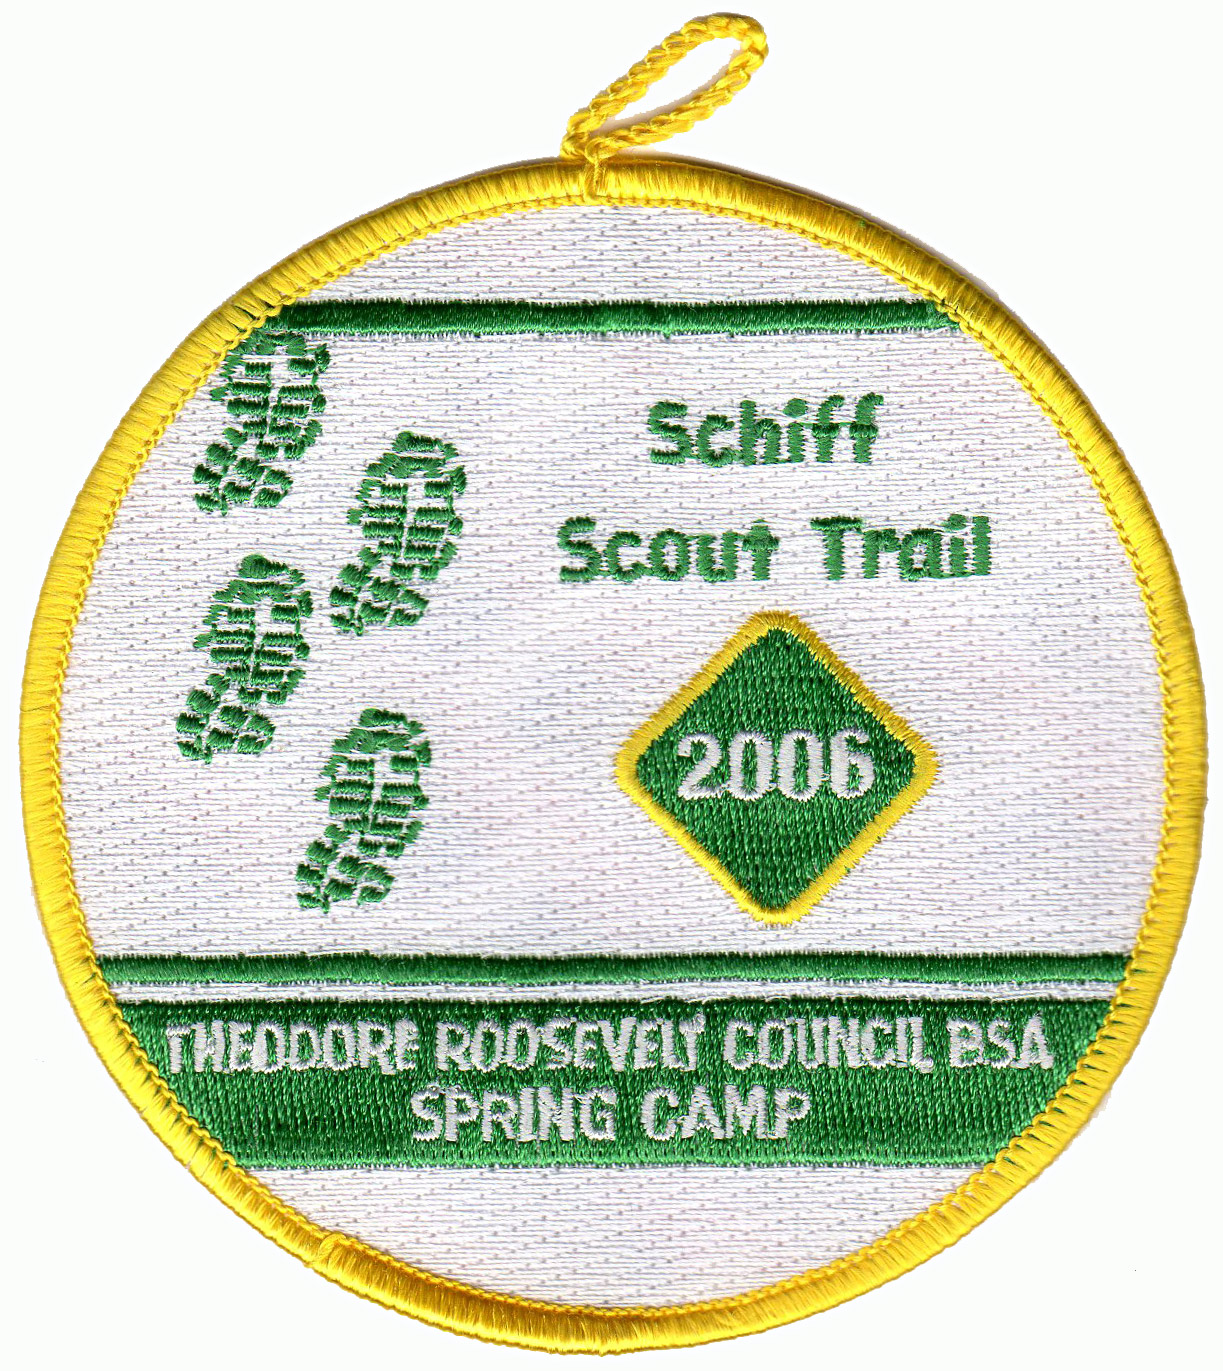 2006 Schiff Scout Trail patch